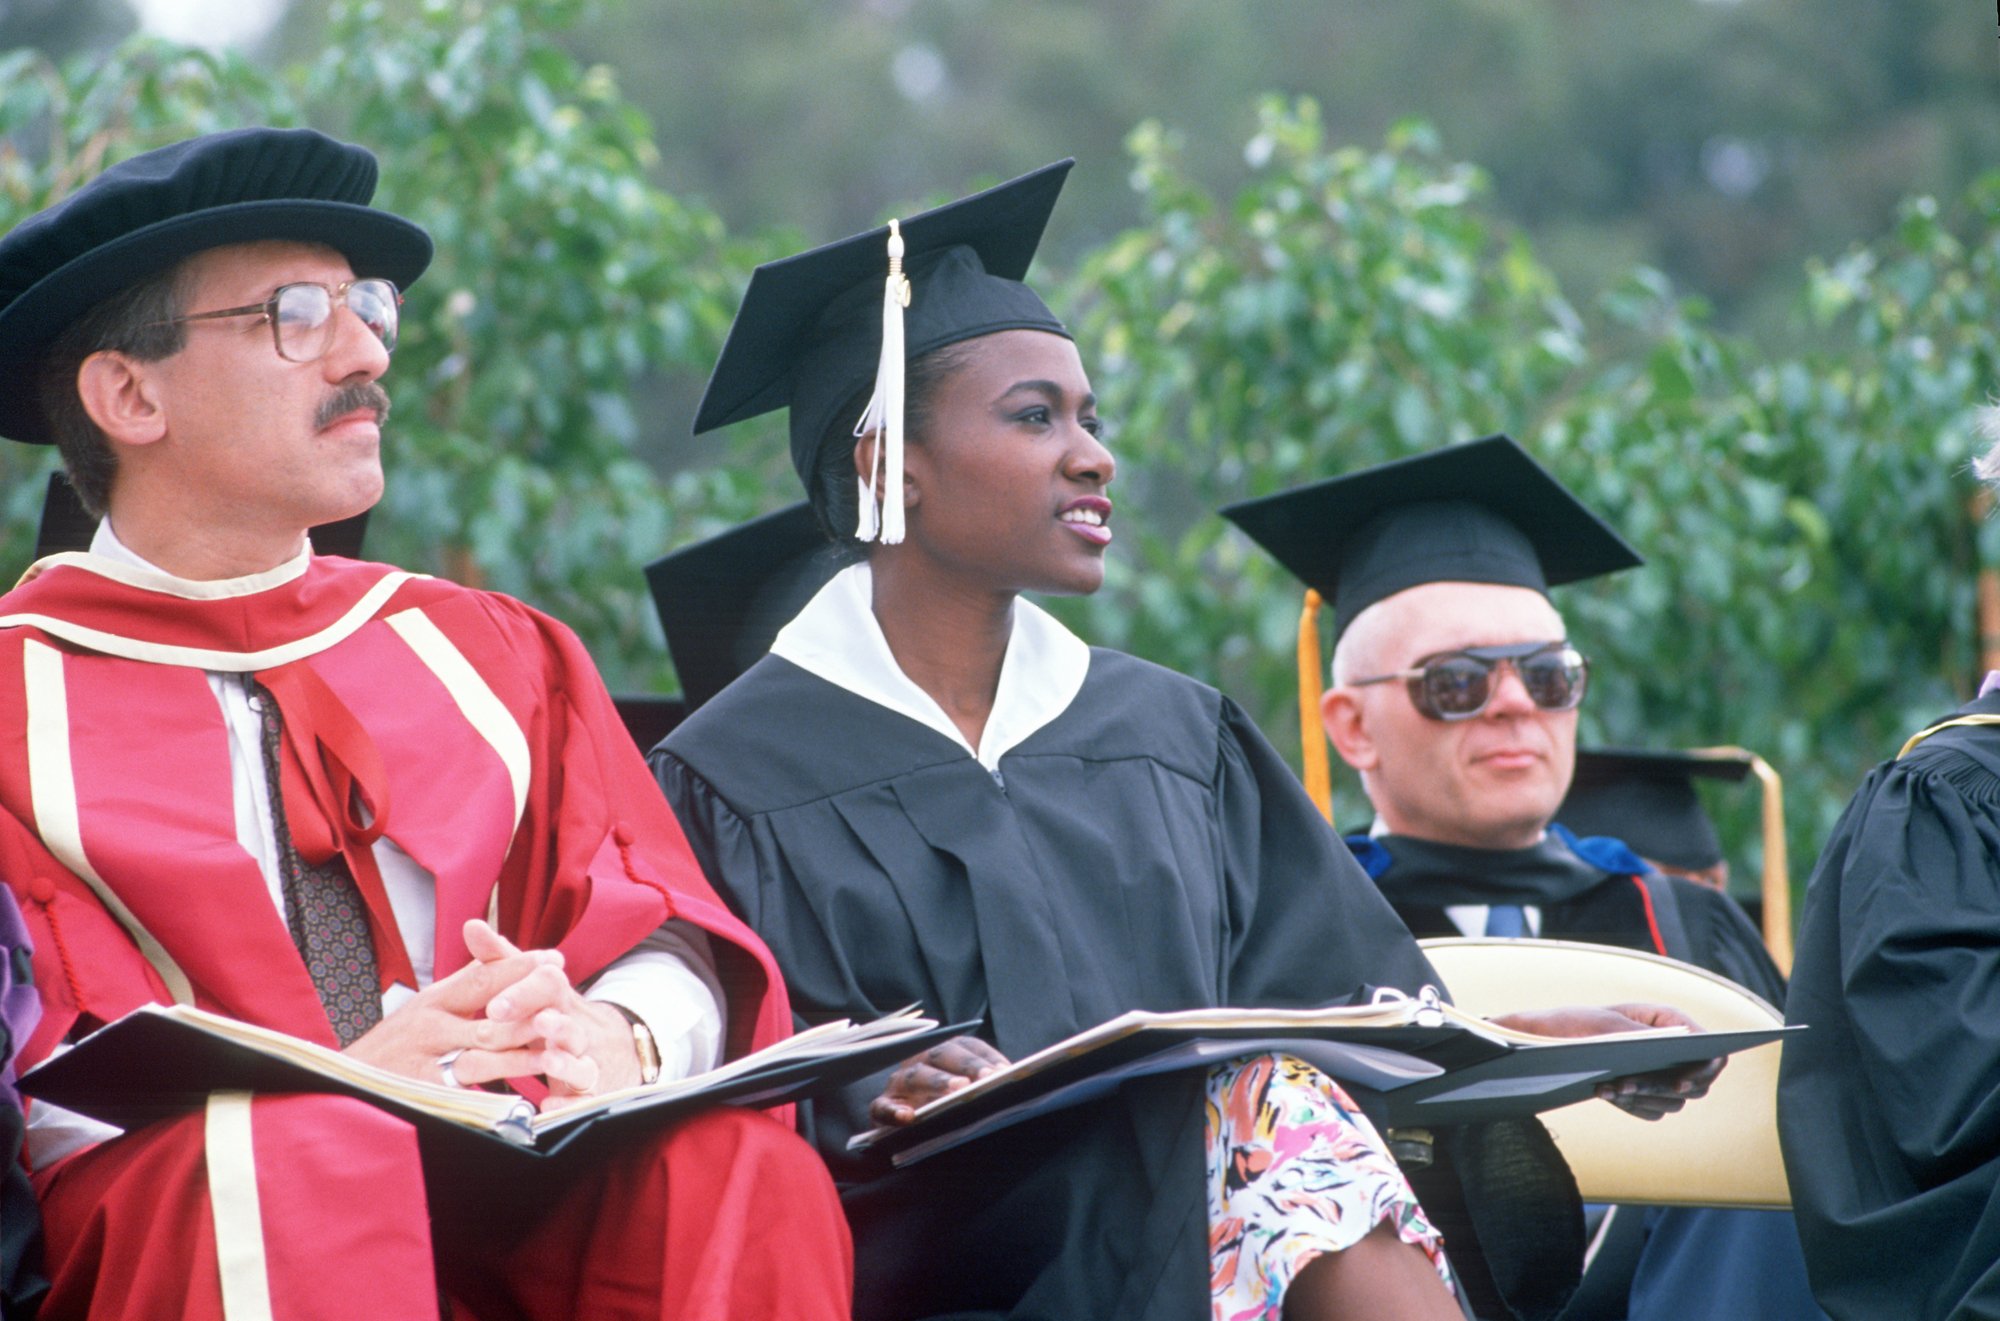 diverse tenured professors graduation ceremony academic dress shutterstock_269108810